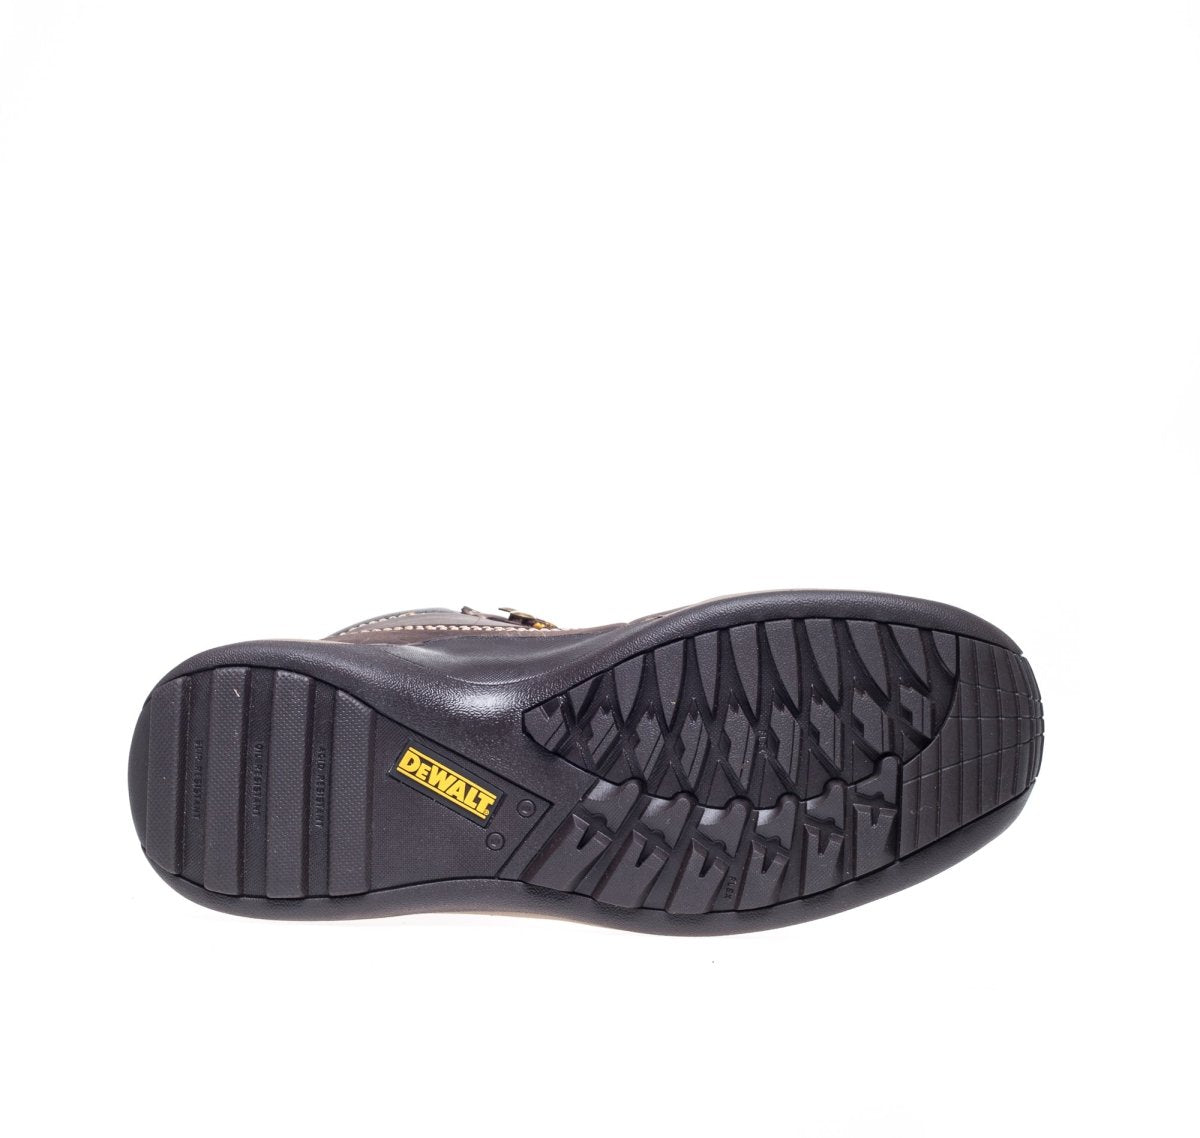 DeWalt Apprentice Steel Toe Cap Hiker Safety Boots - Shoe Store Direct